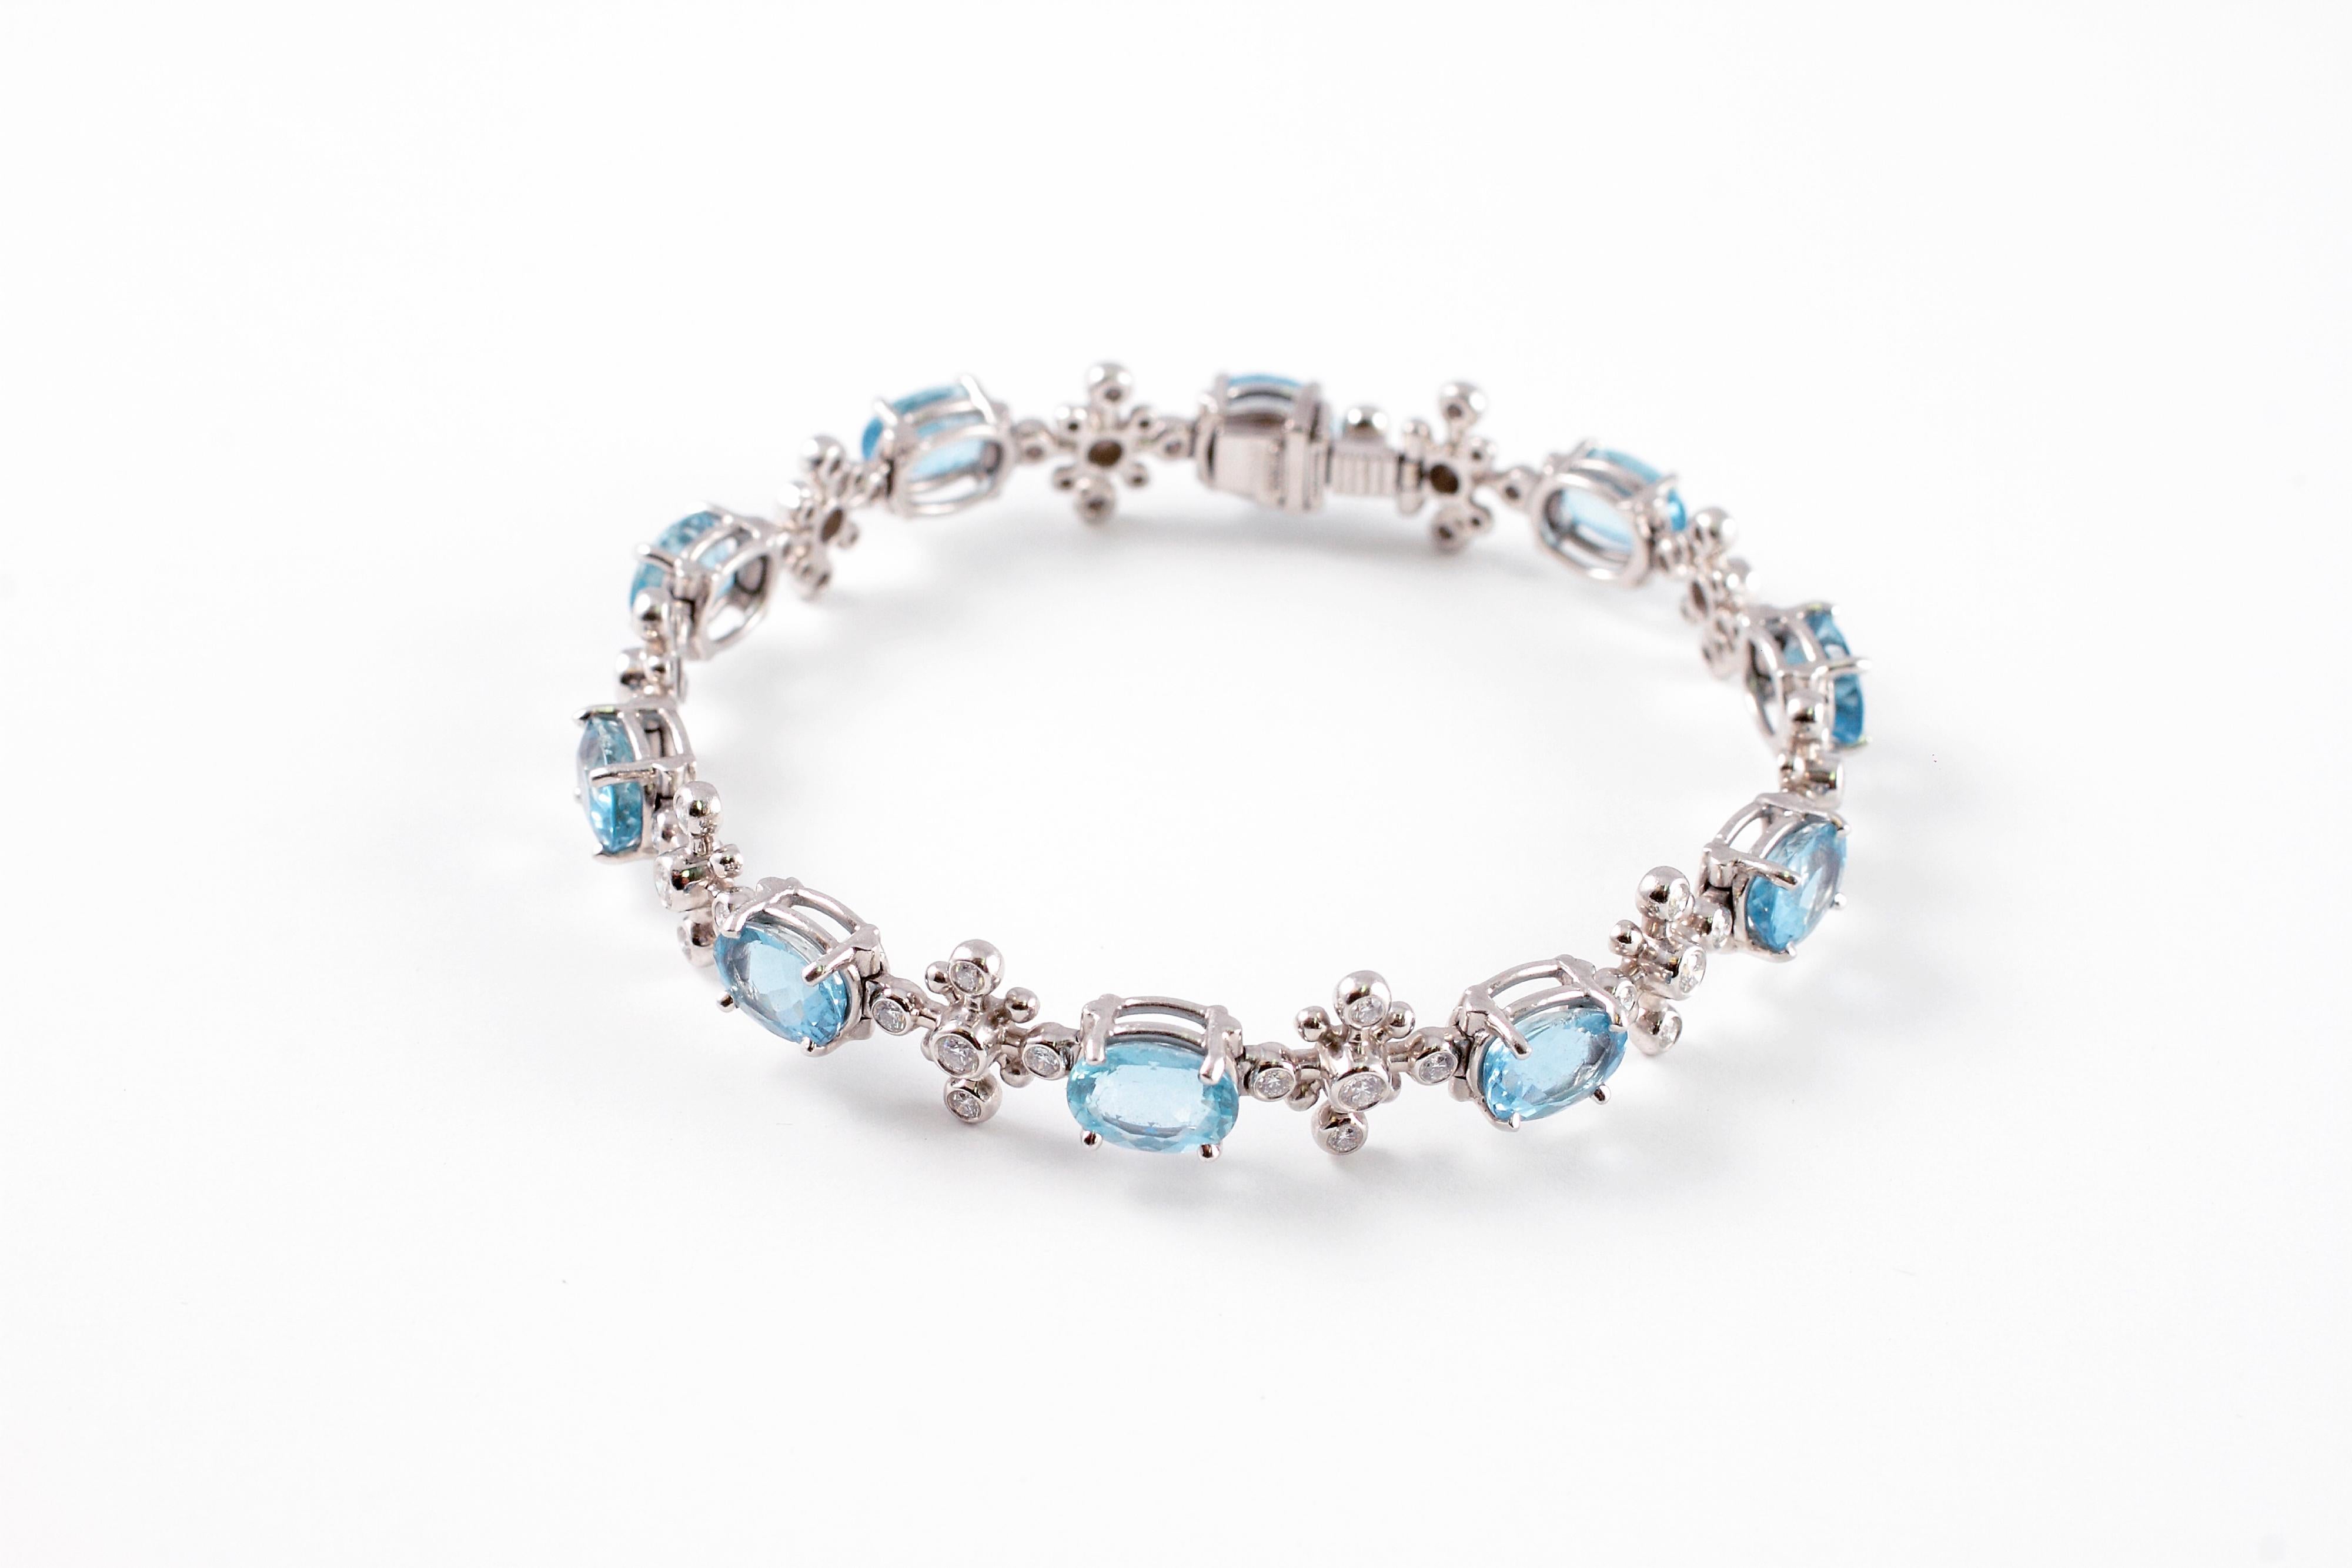 Tiffany & Co. Aquamarine Diamond Bracelet from the 